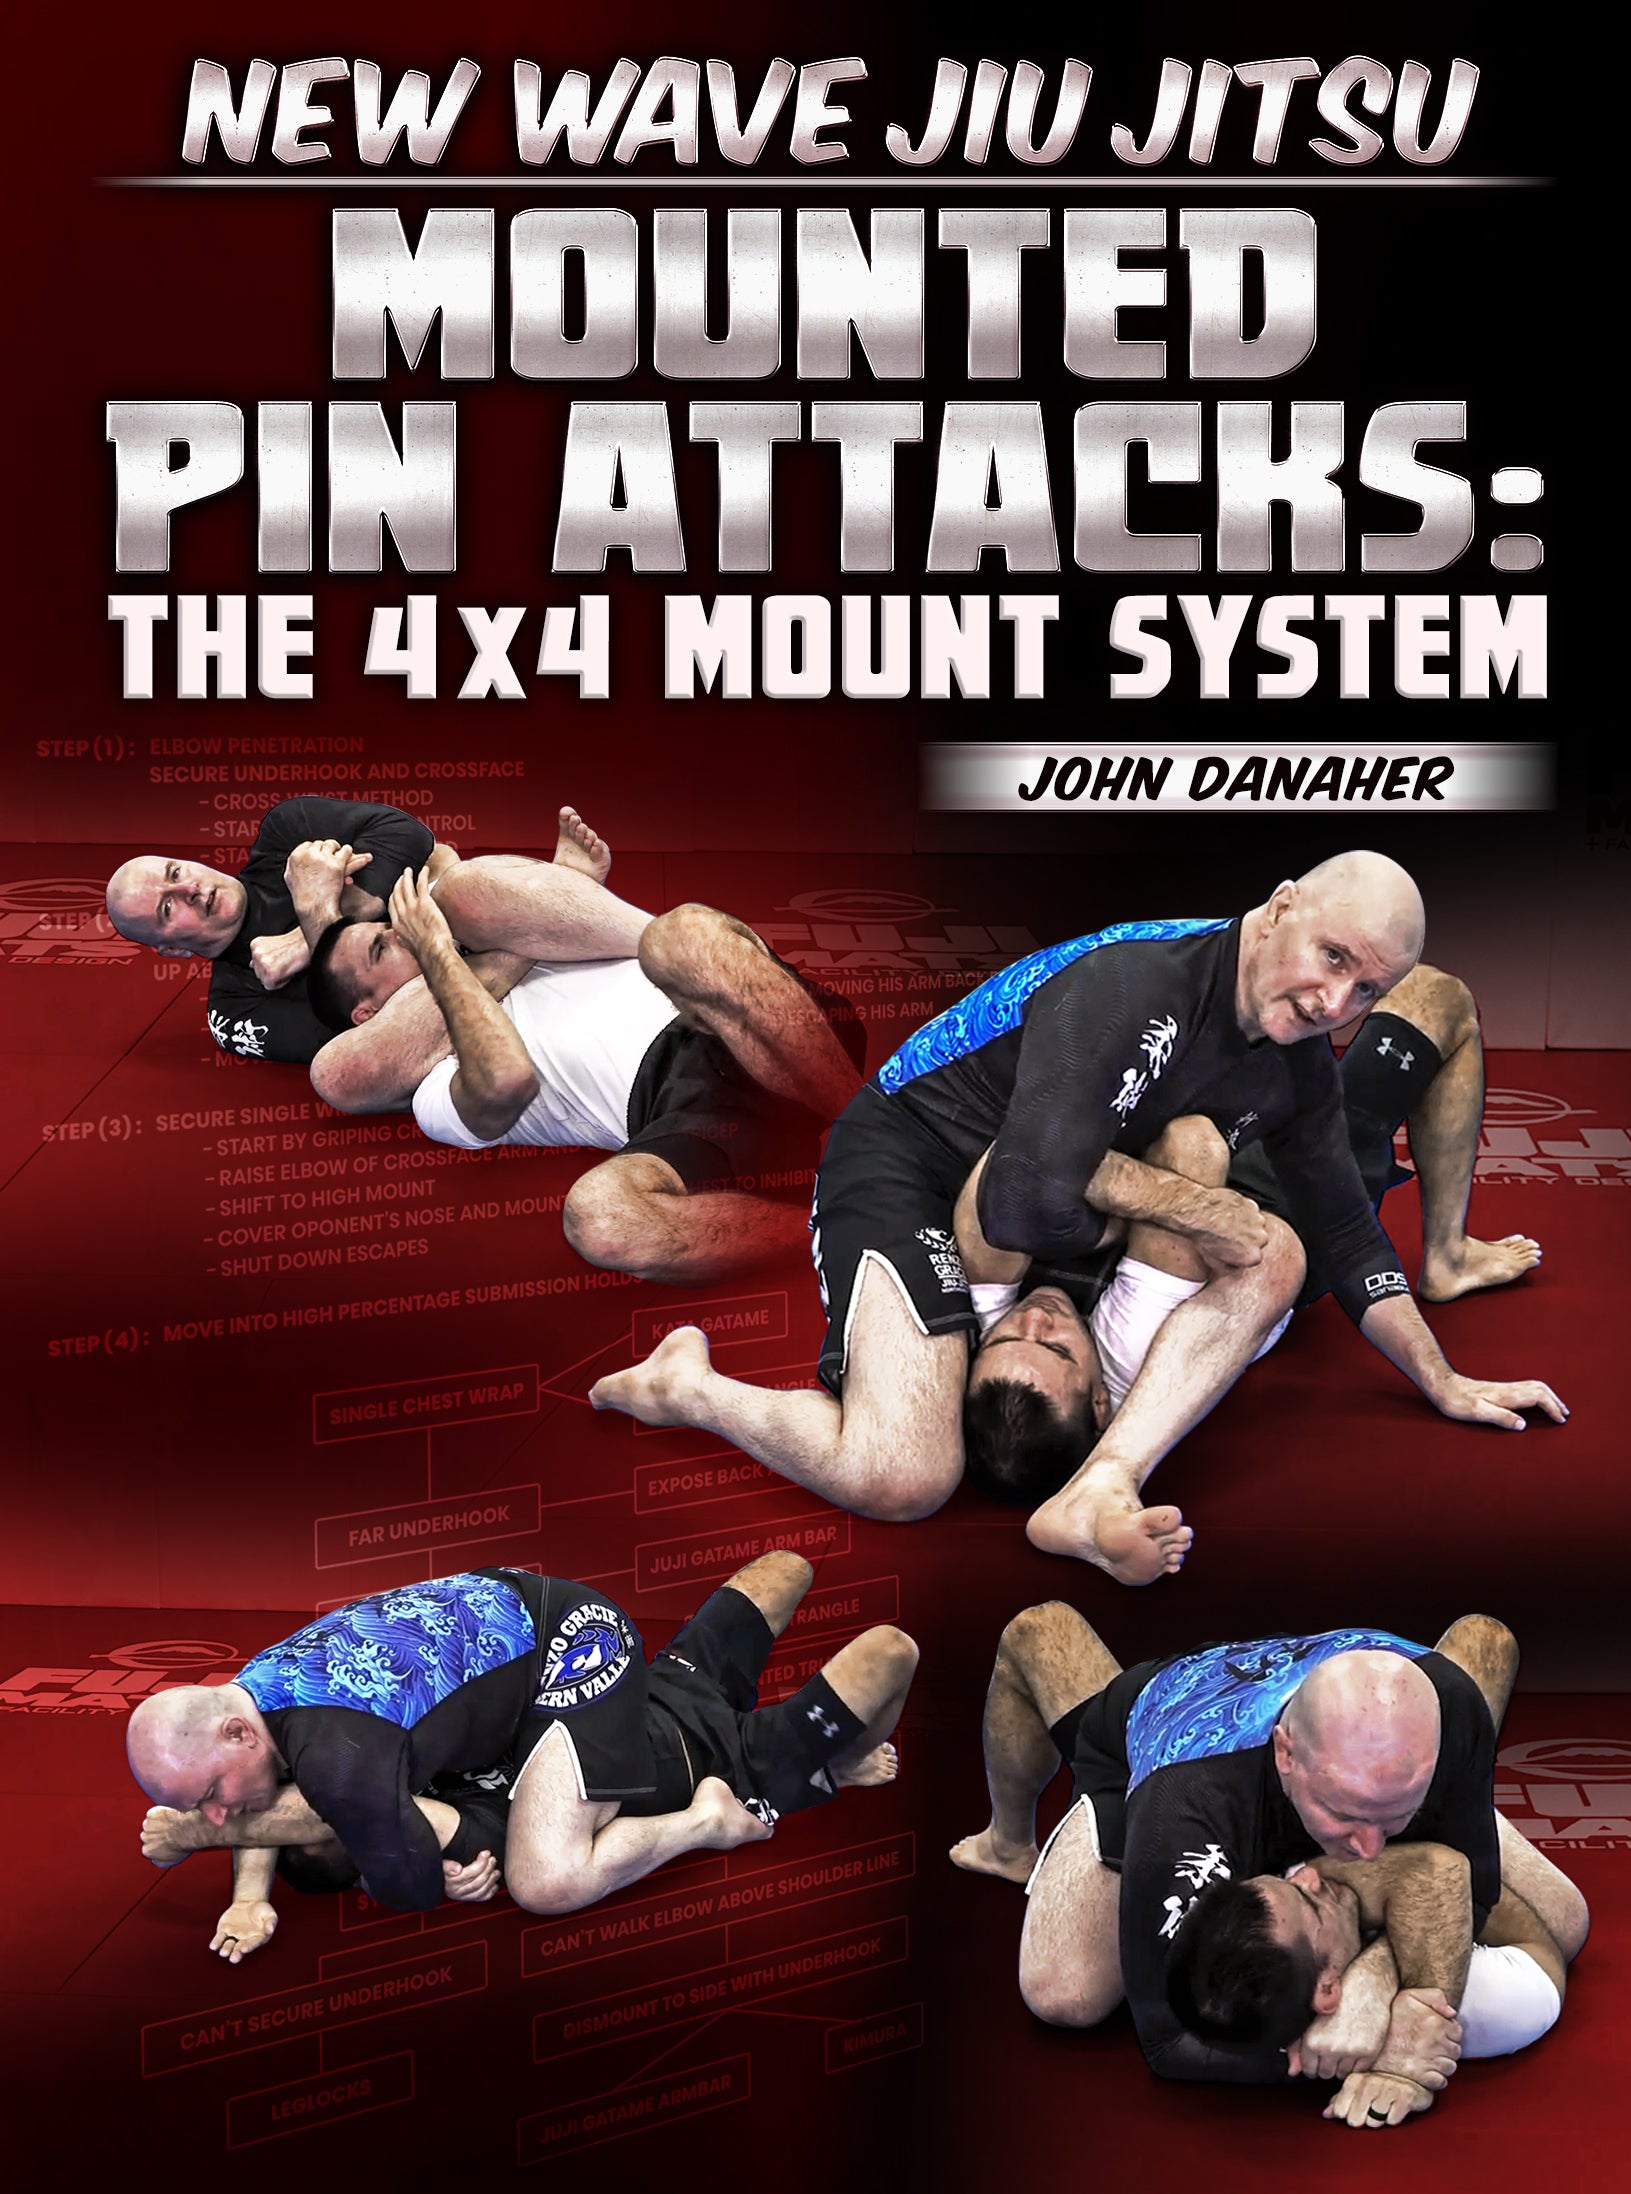 New Wave Jiu Jitsu: Mounted Pin Attacks - The 4x4 Mount System by 